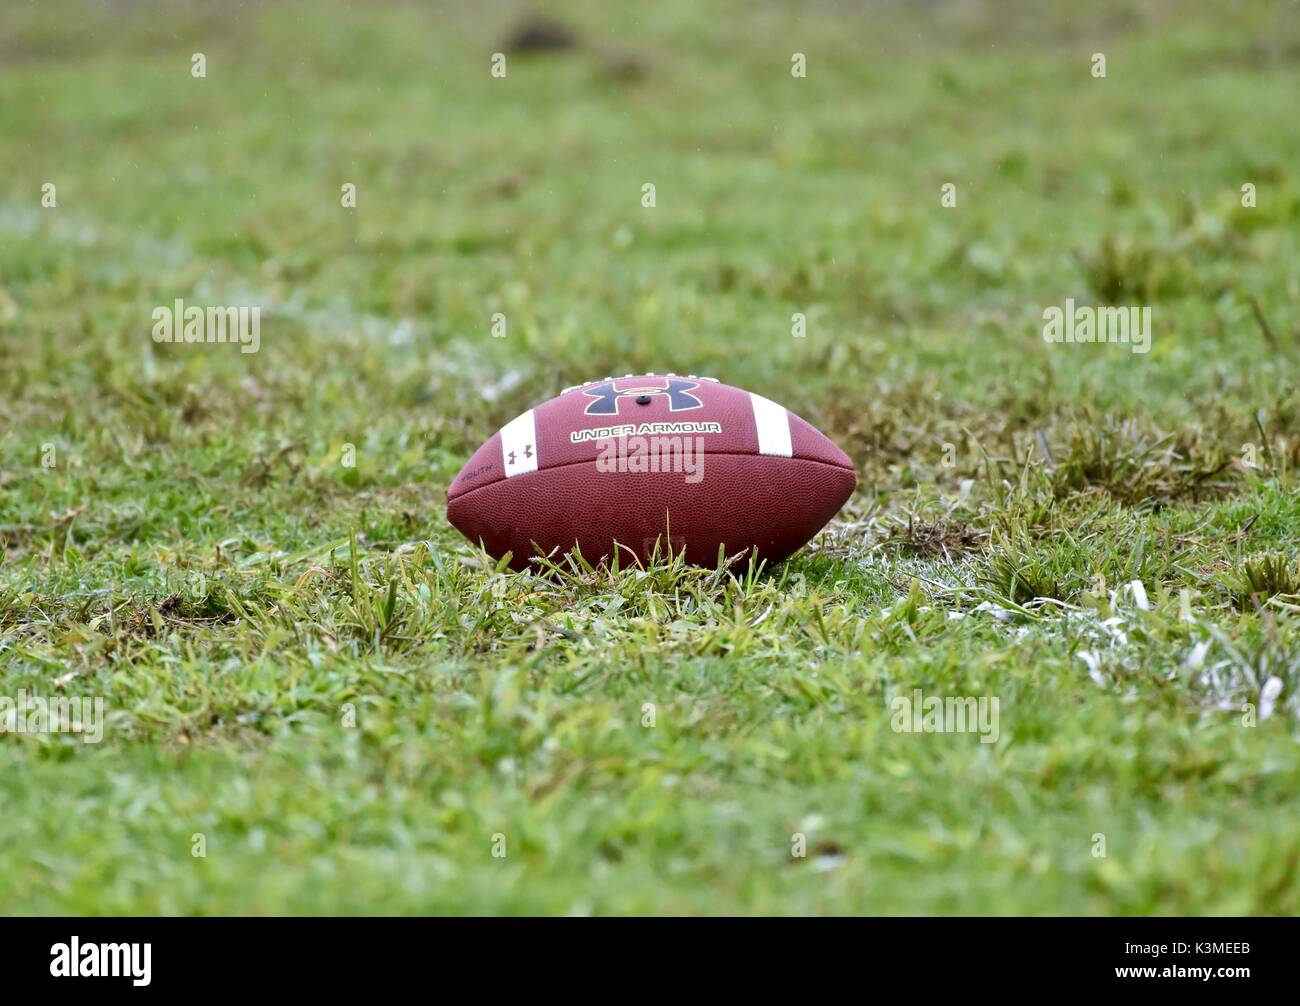 Fußball auf dem Feld Stockfoto